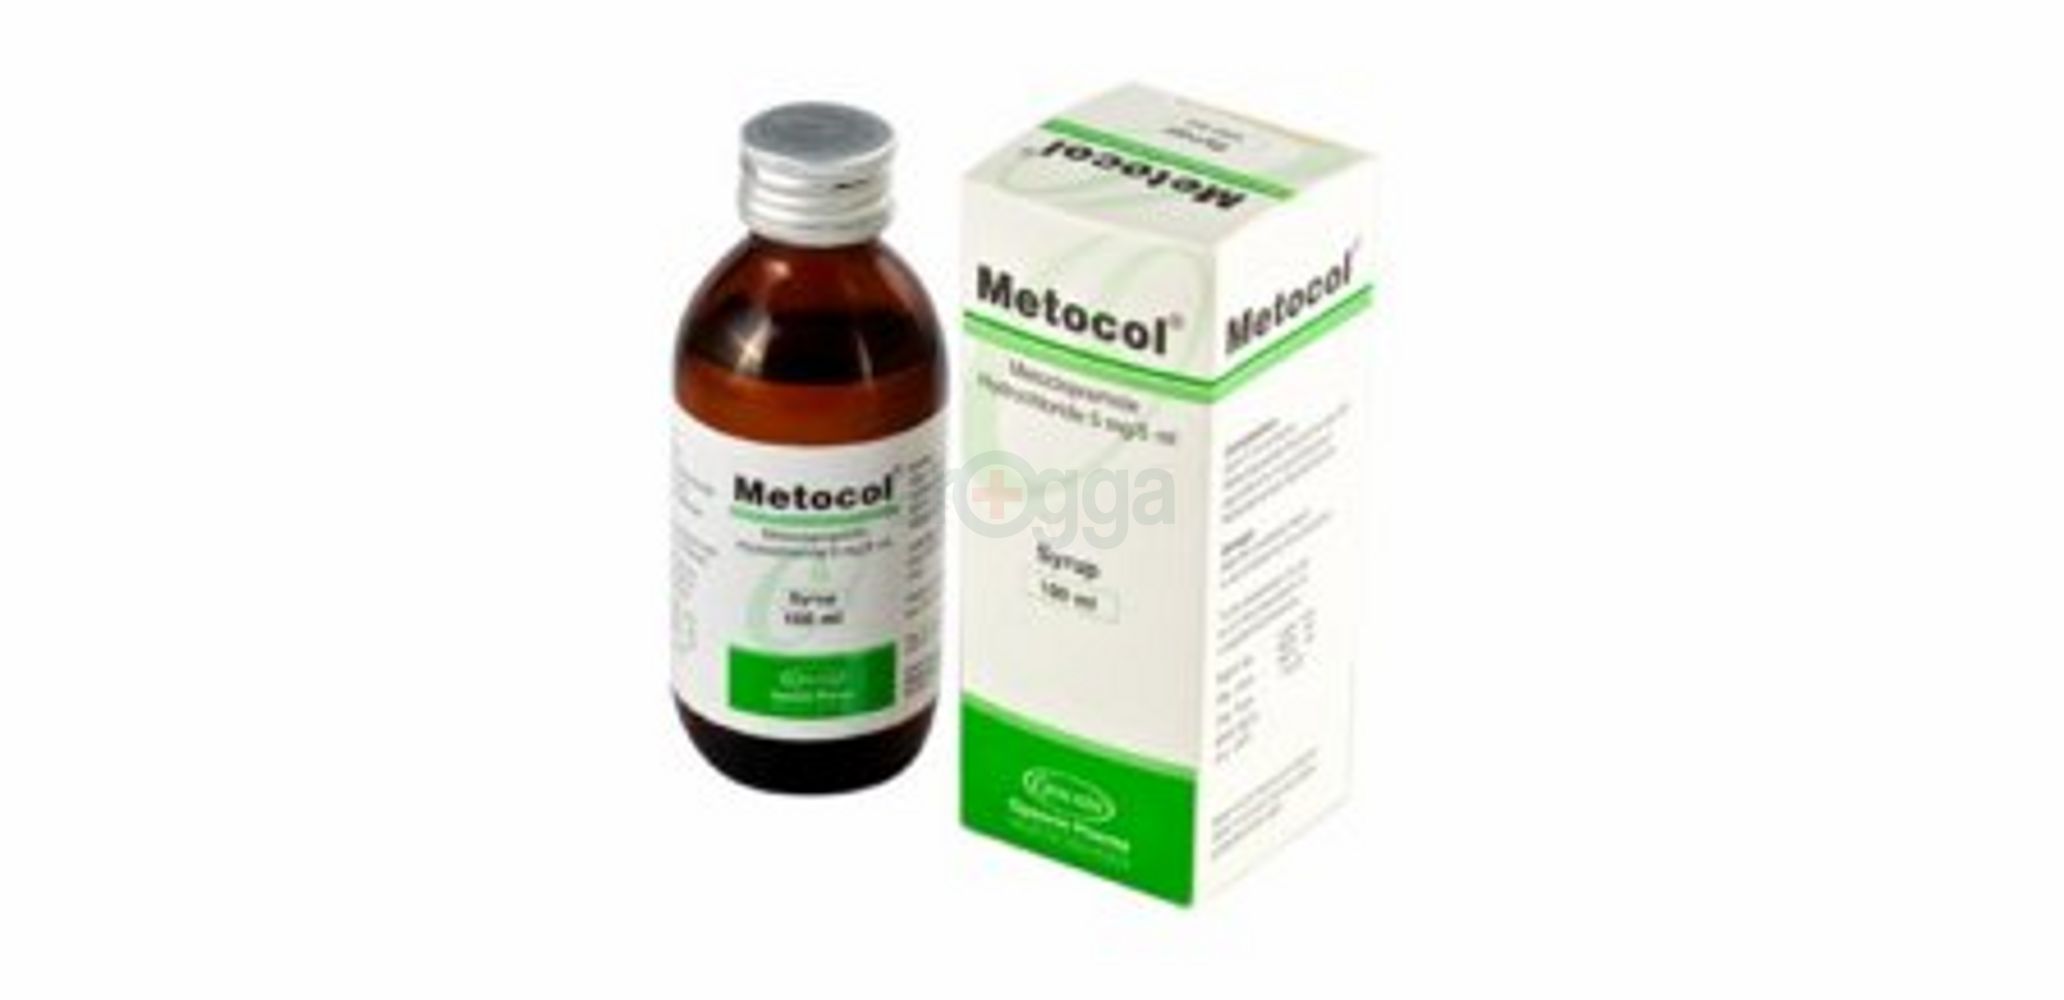 Metocol